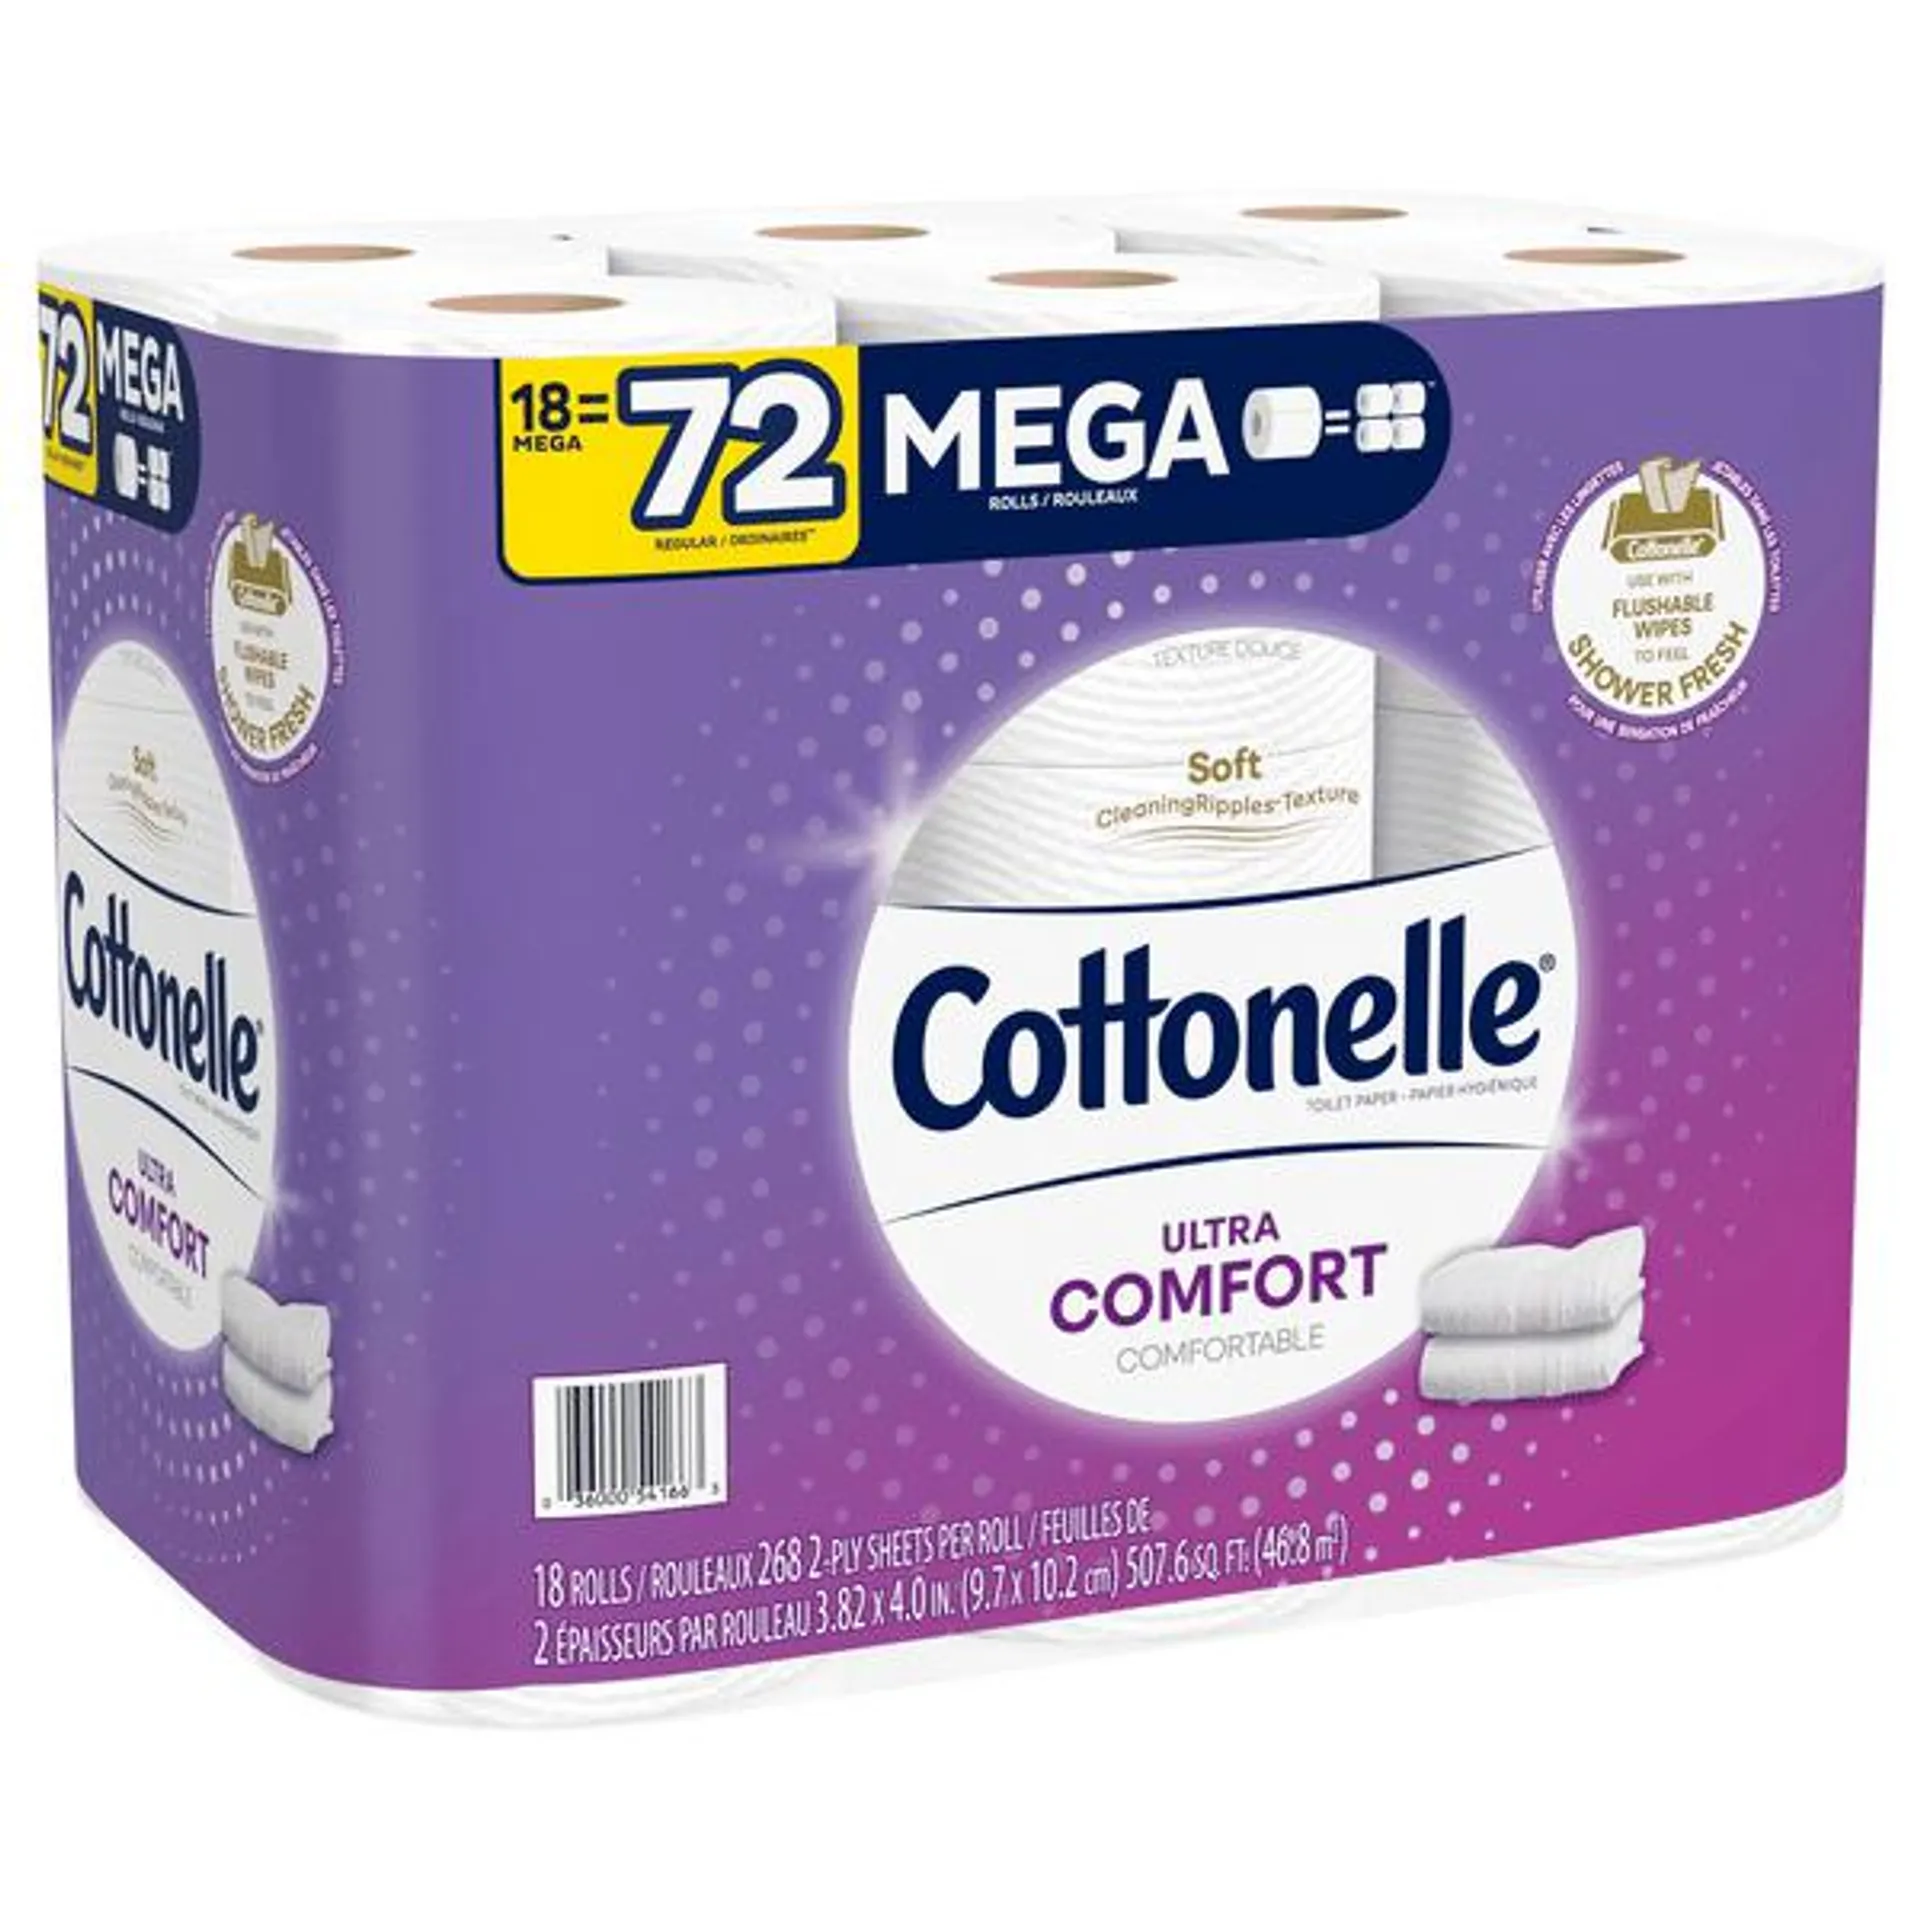 Cottonelle Toilet Paper, Ultra Comfort, 72 Mega Rolls, 2-Ply